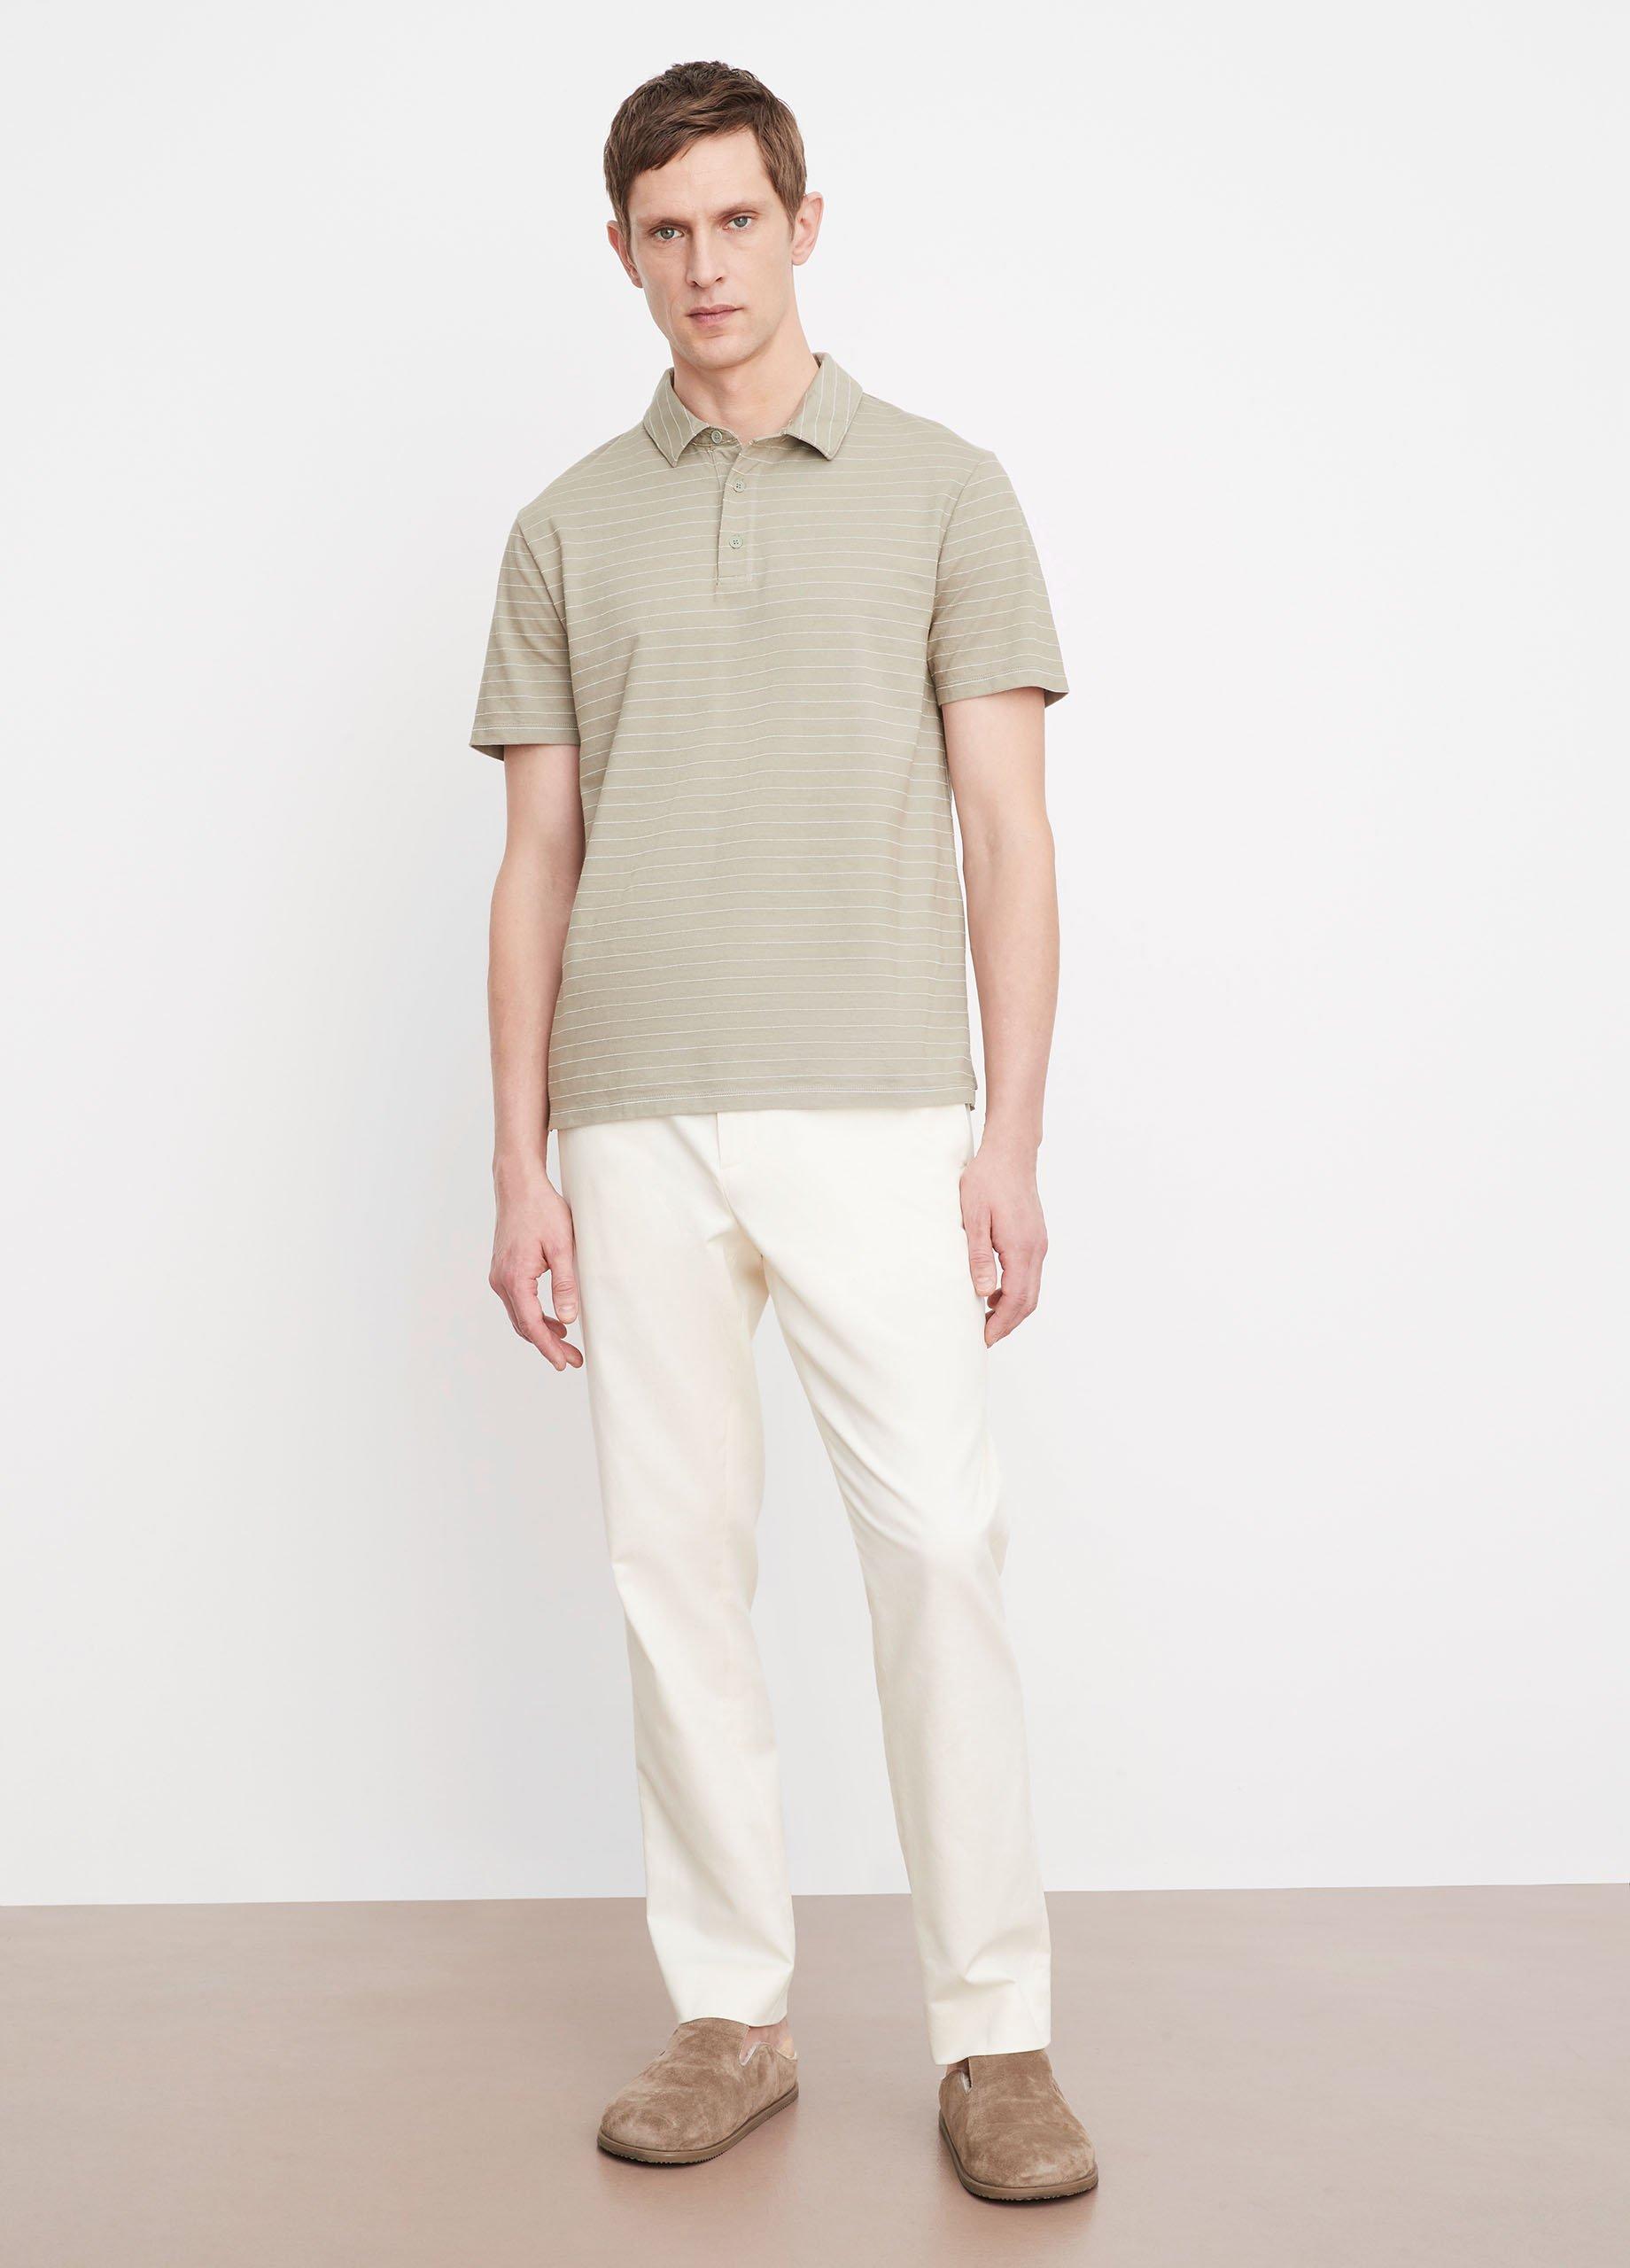 Garment Dye Fleck Stripe Short-Sleeve Polo Shirt in Tees & Hoodies | Vince